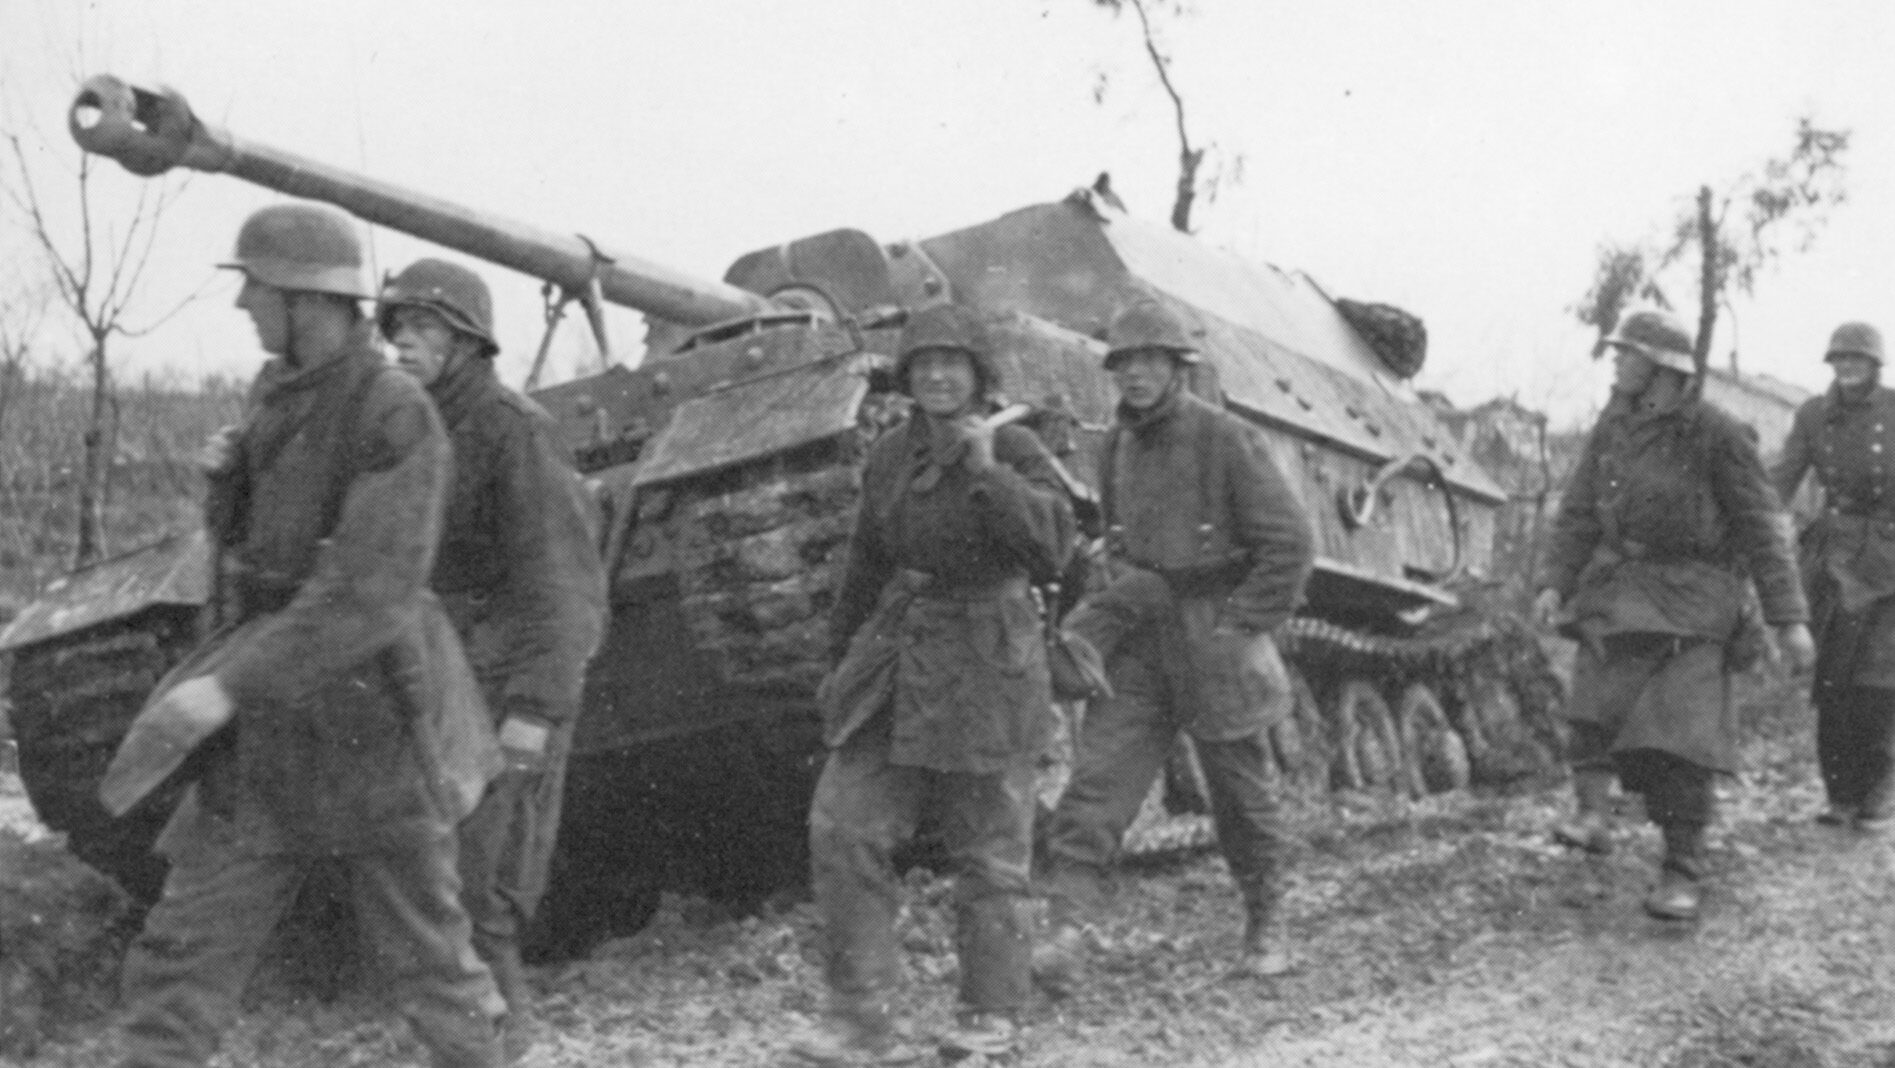 German panzergrenadiers move past an idled Ferdinand self-propelled assault gun on a roadside near the Italian town of Nettuno in March 1944.